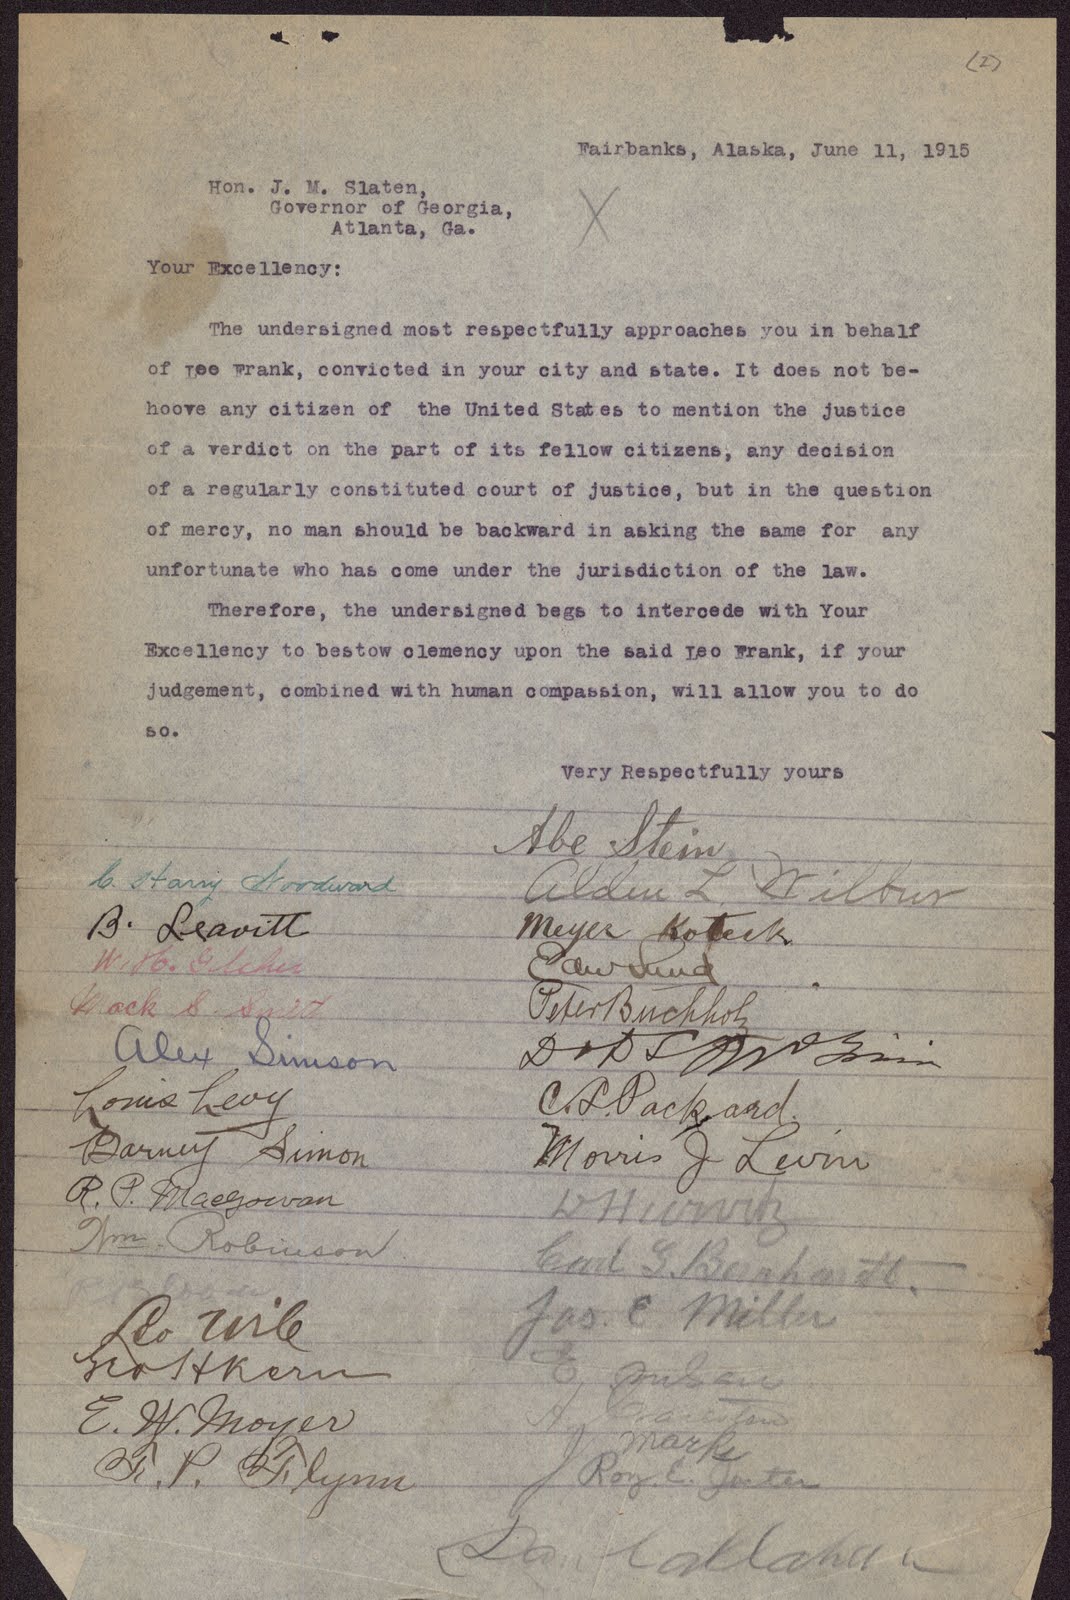 Petition addressed to Honor J. M. Slaton of Georgia, Atlanta asking for clemency for Leo Frank (June 11, 1915)